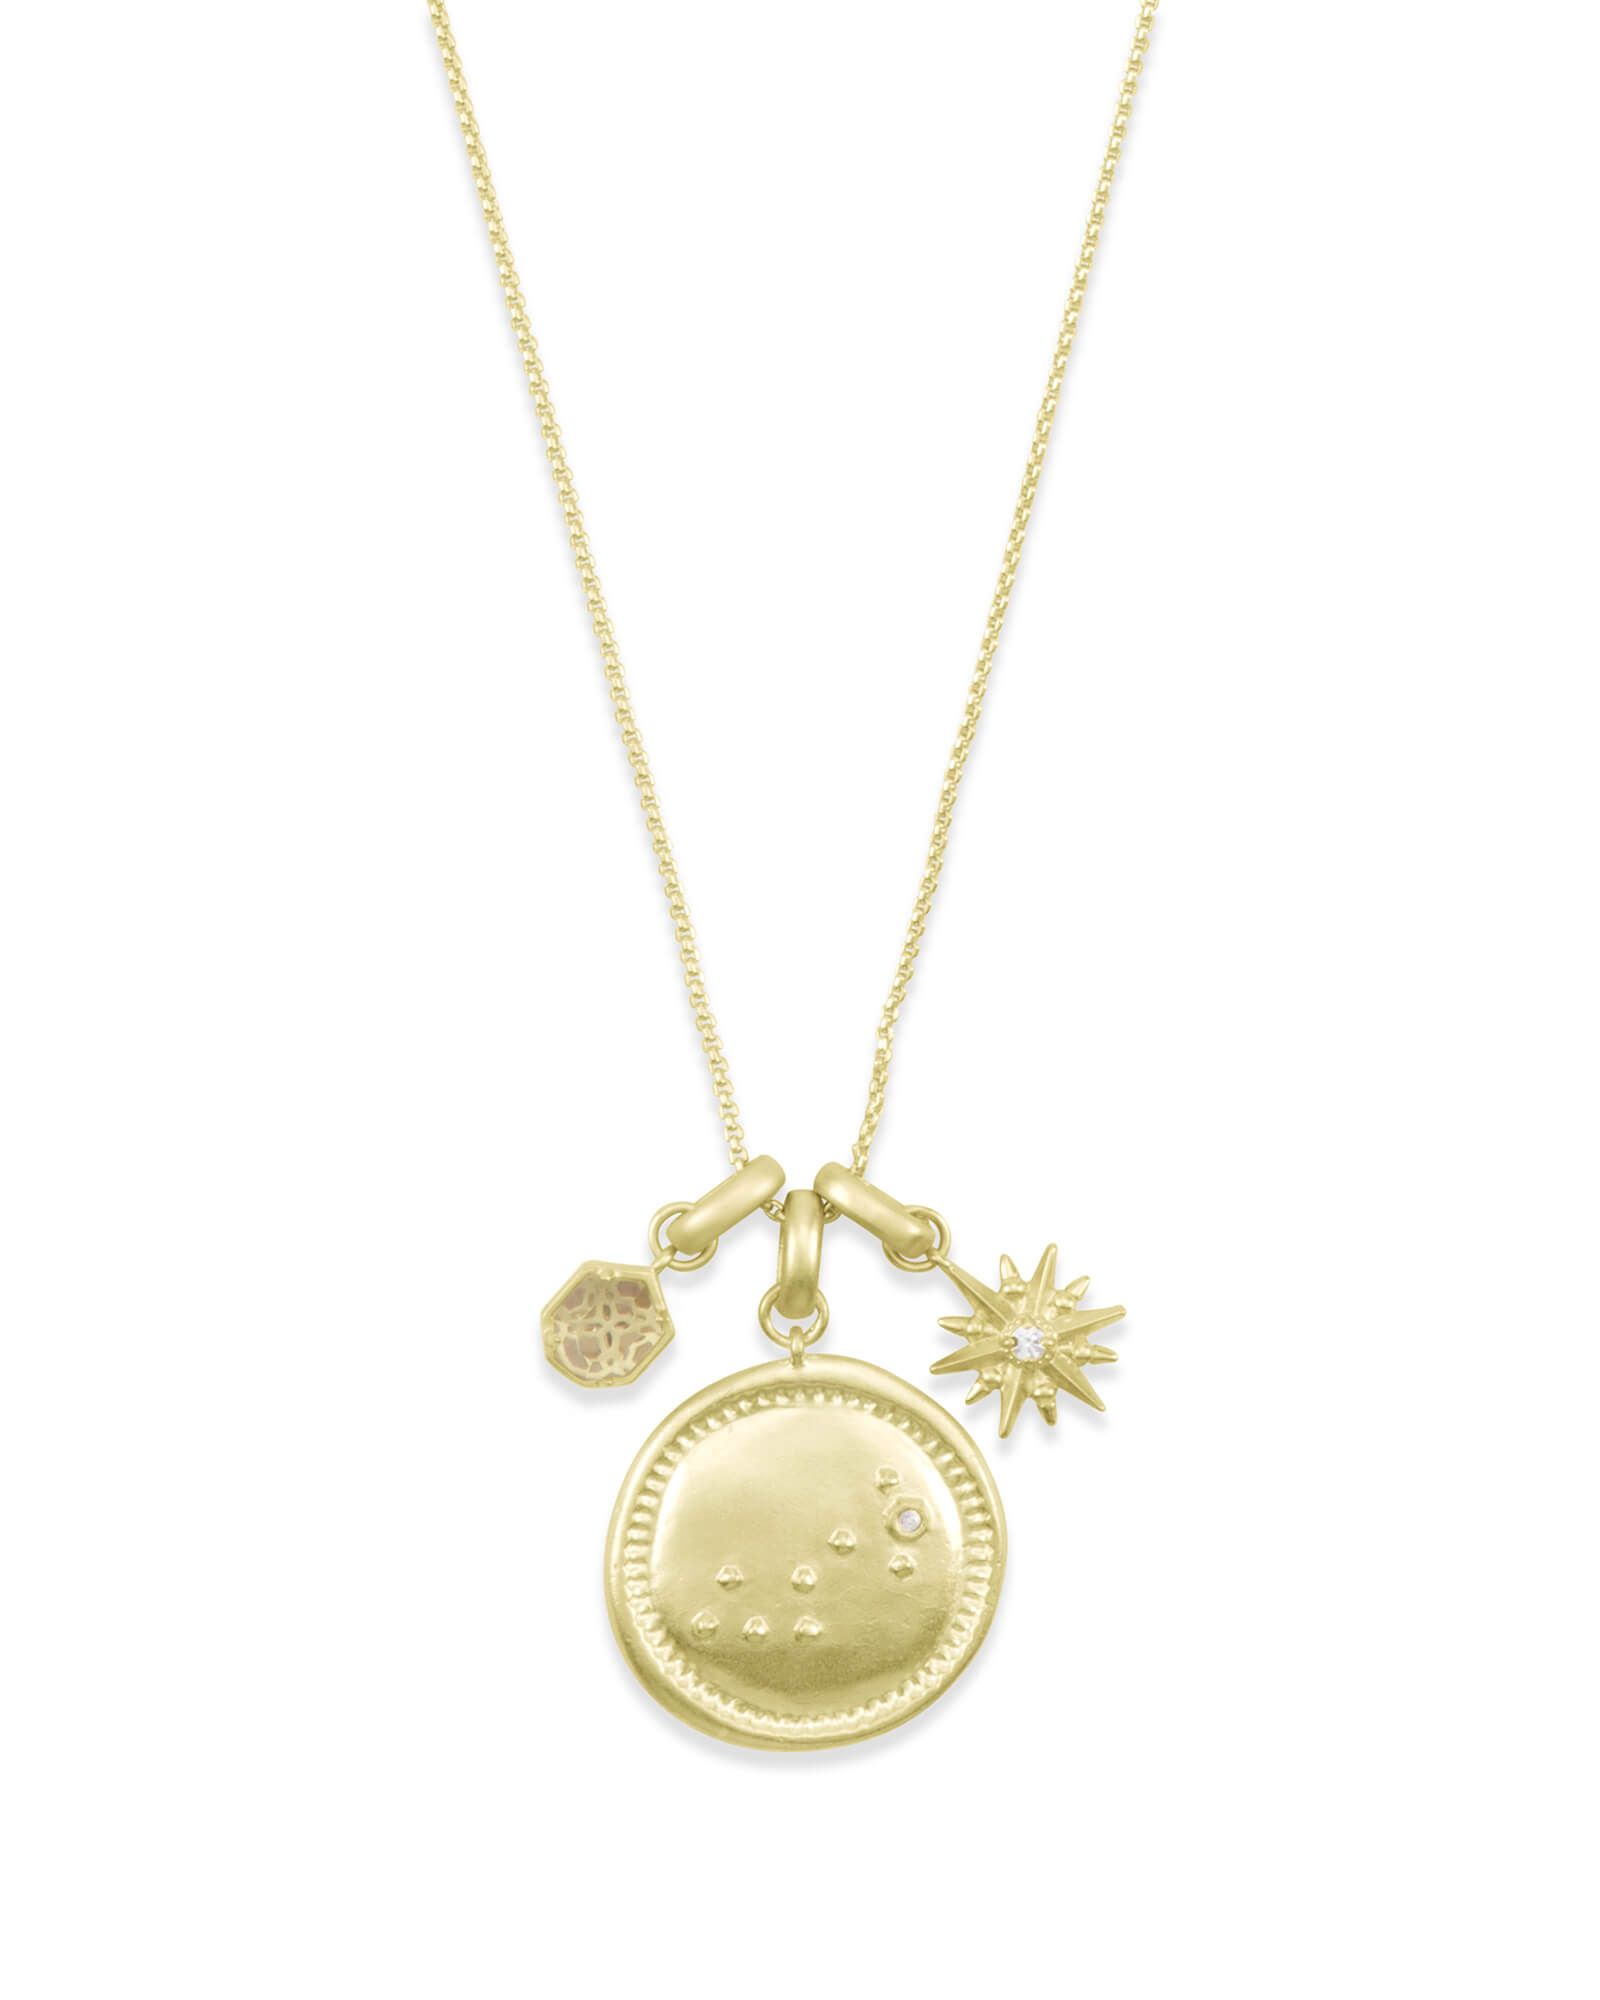 November Scorpio Charm Necklace Set in Gold | Kendra Scott